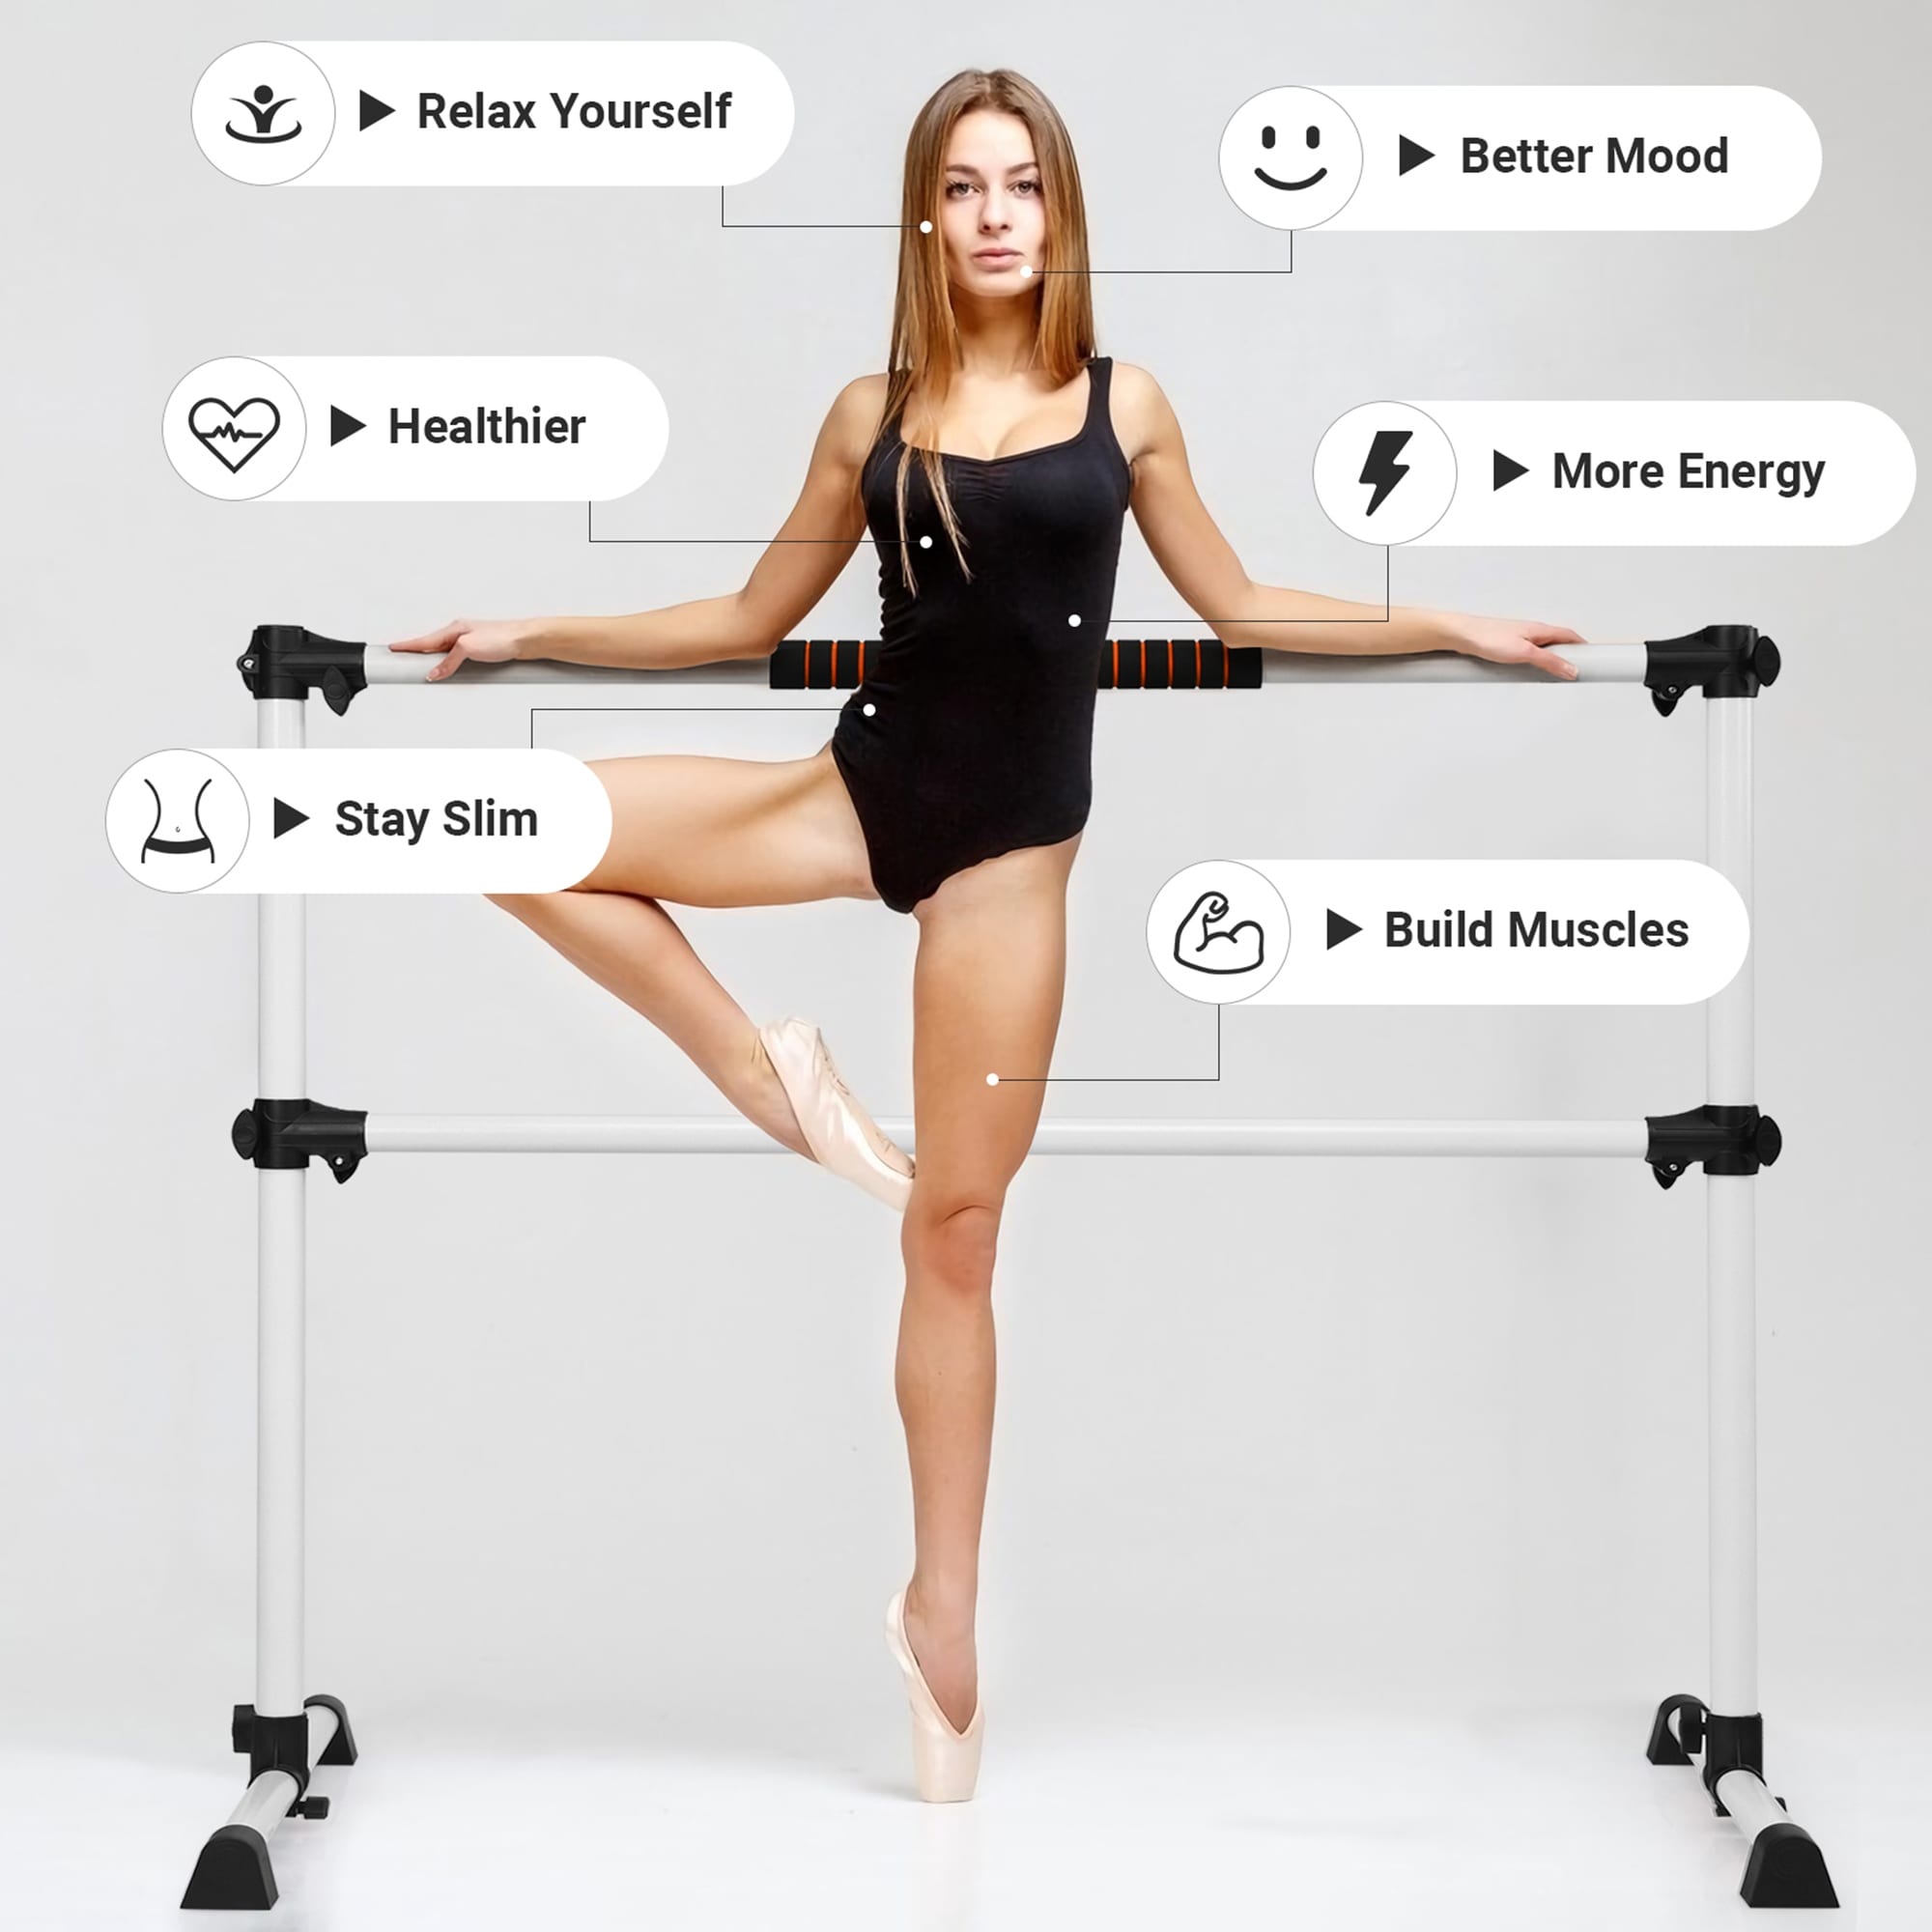 Goplus 4ft Portable Freestanding Ballet Barre Double Dance Stretching Bar 